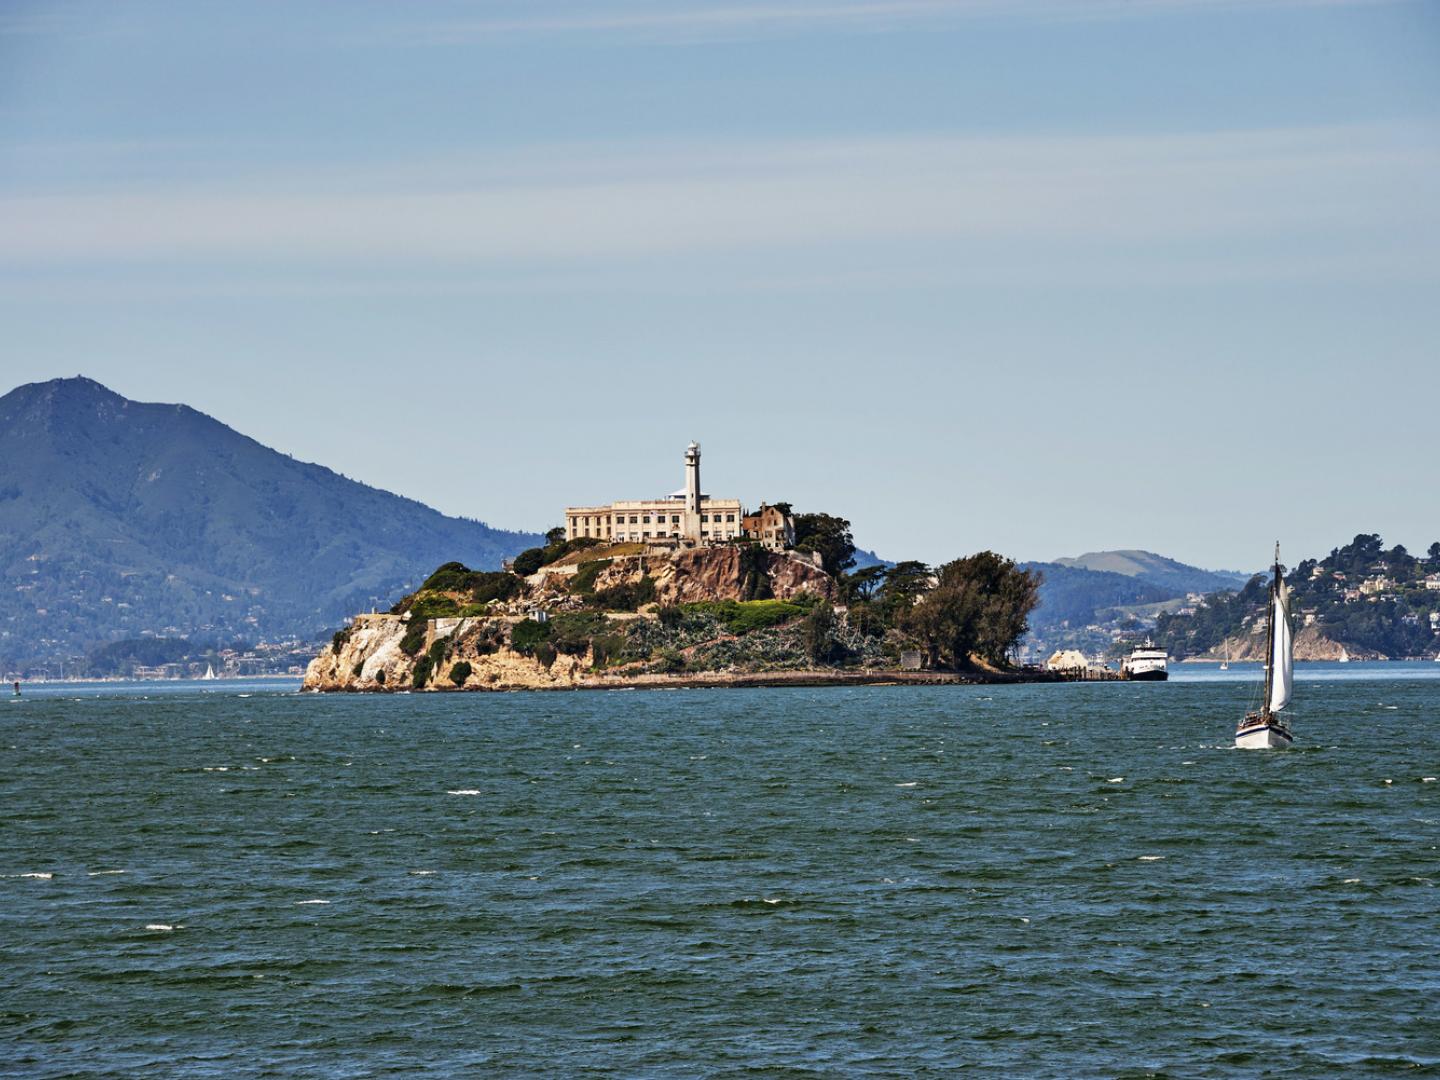 Fisherman's Wharf and Alcatraz lsland